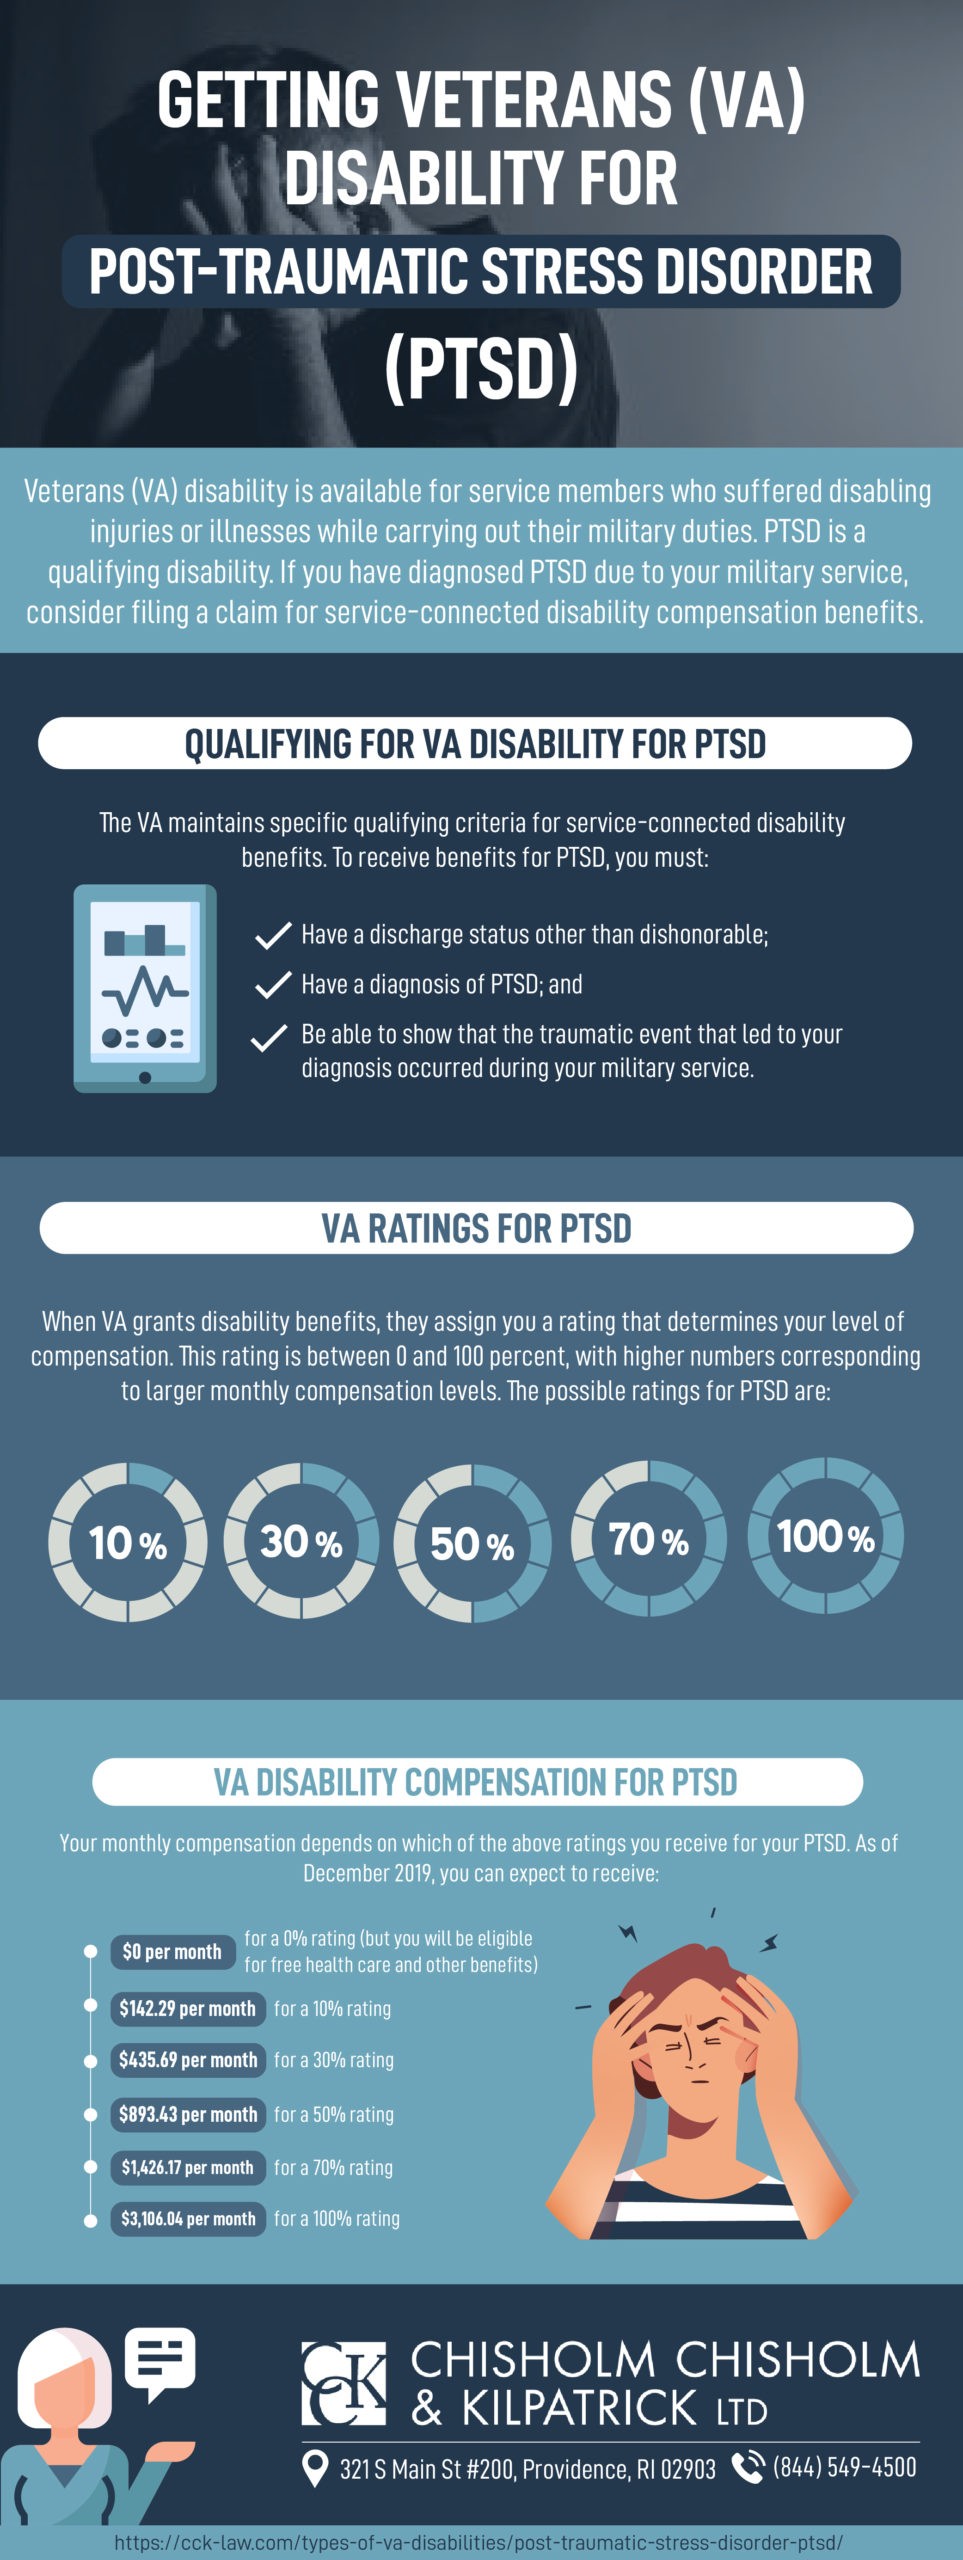 Getting Veterans (VA) Disability for Post-Traumatic Stress Disorder (PTSD)